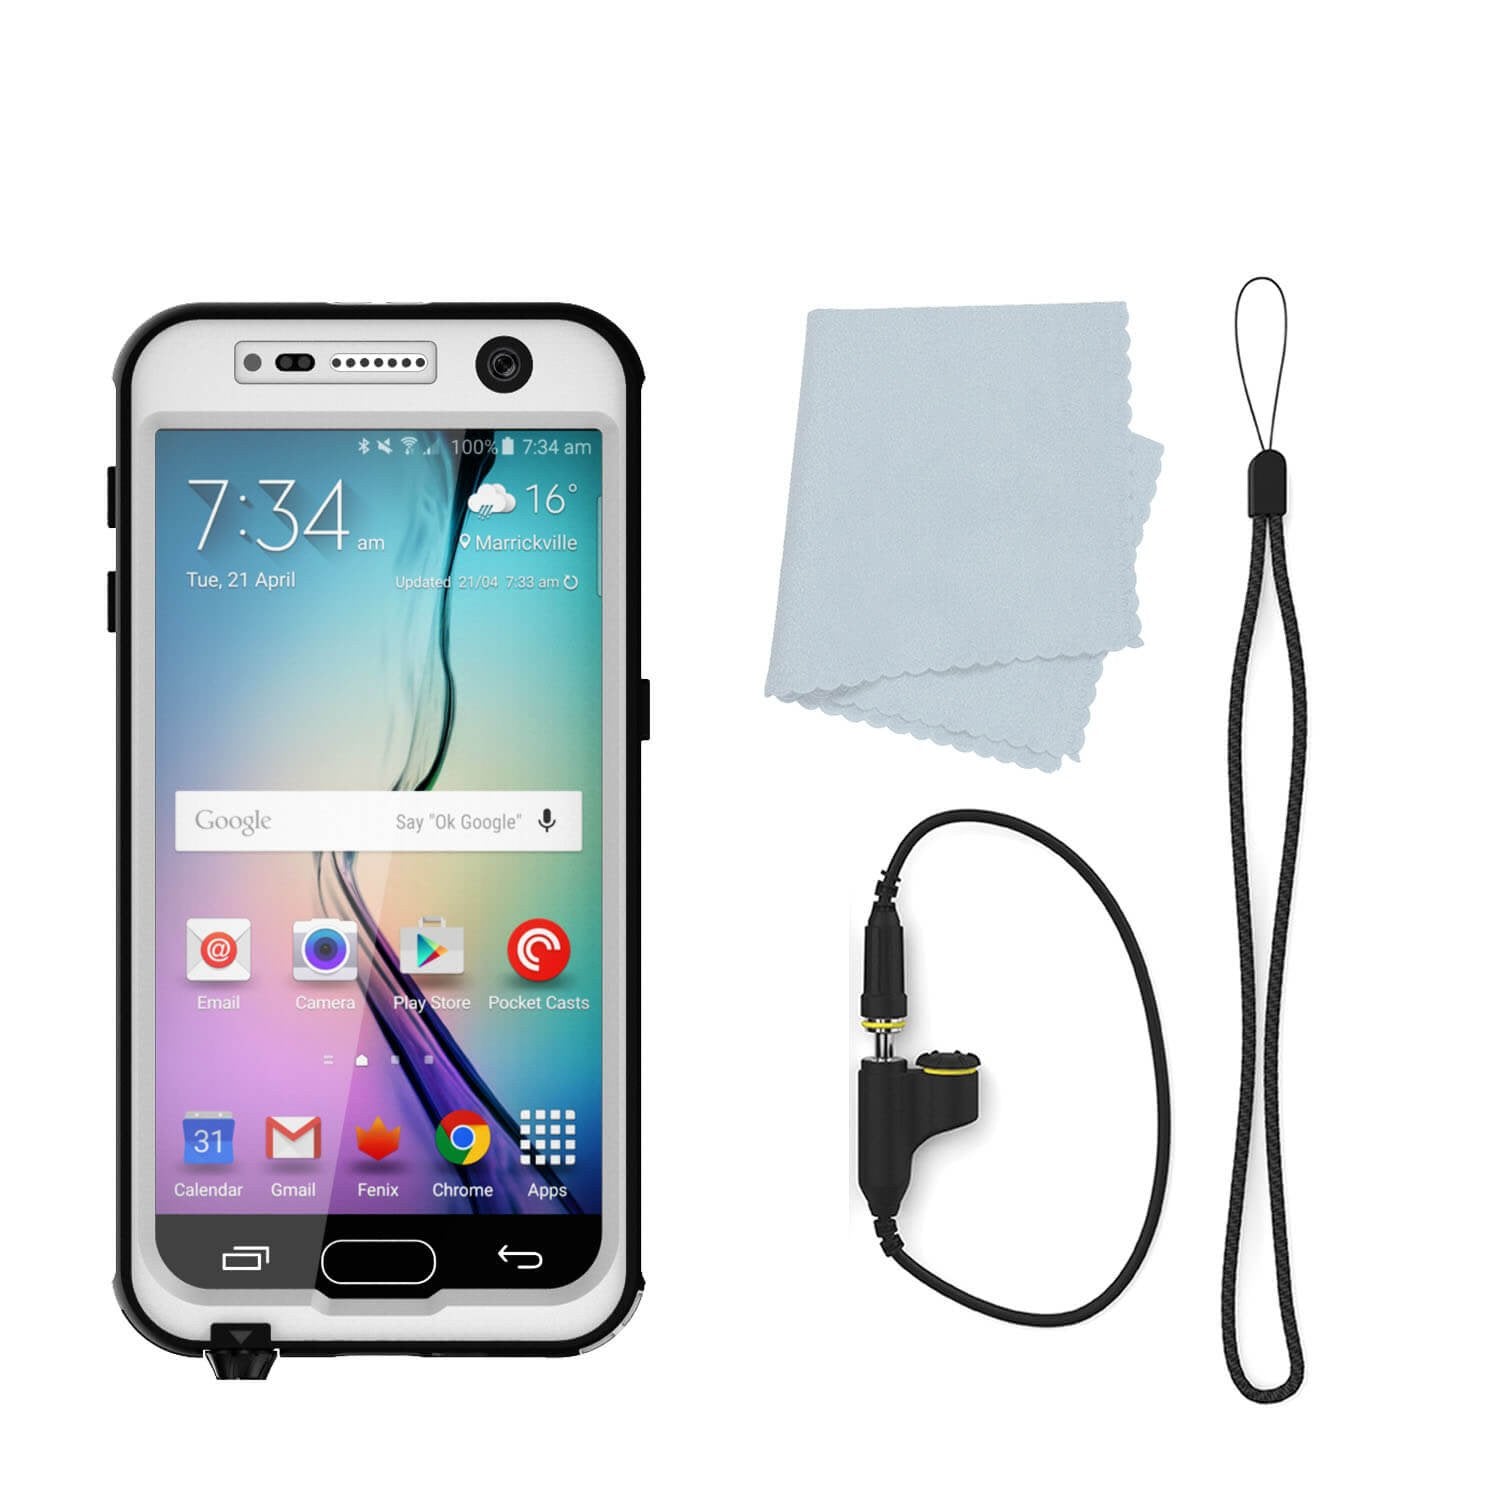 Galaxy S6 Waterproof Case, Punkcase StudStar White Thin 6.6ft Underwater IP68 Shock/Dirt/Snow Proof